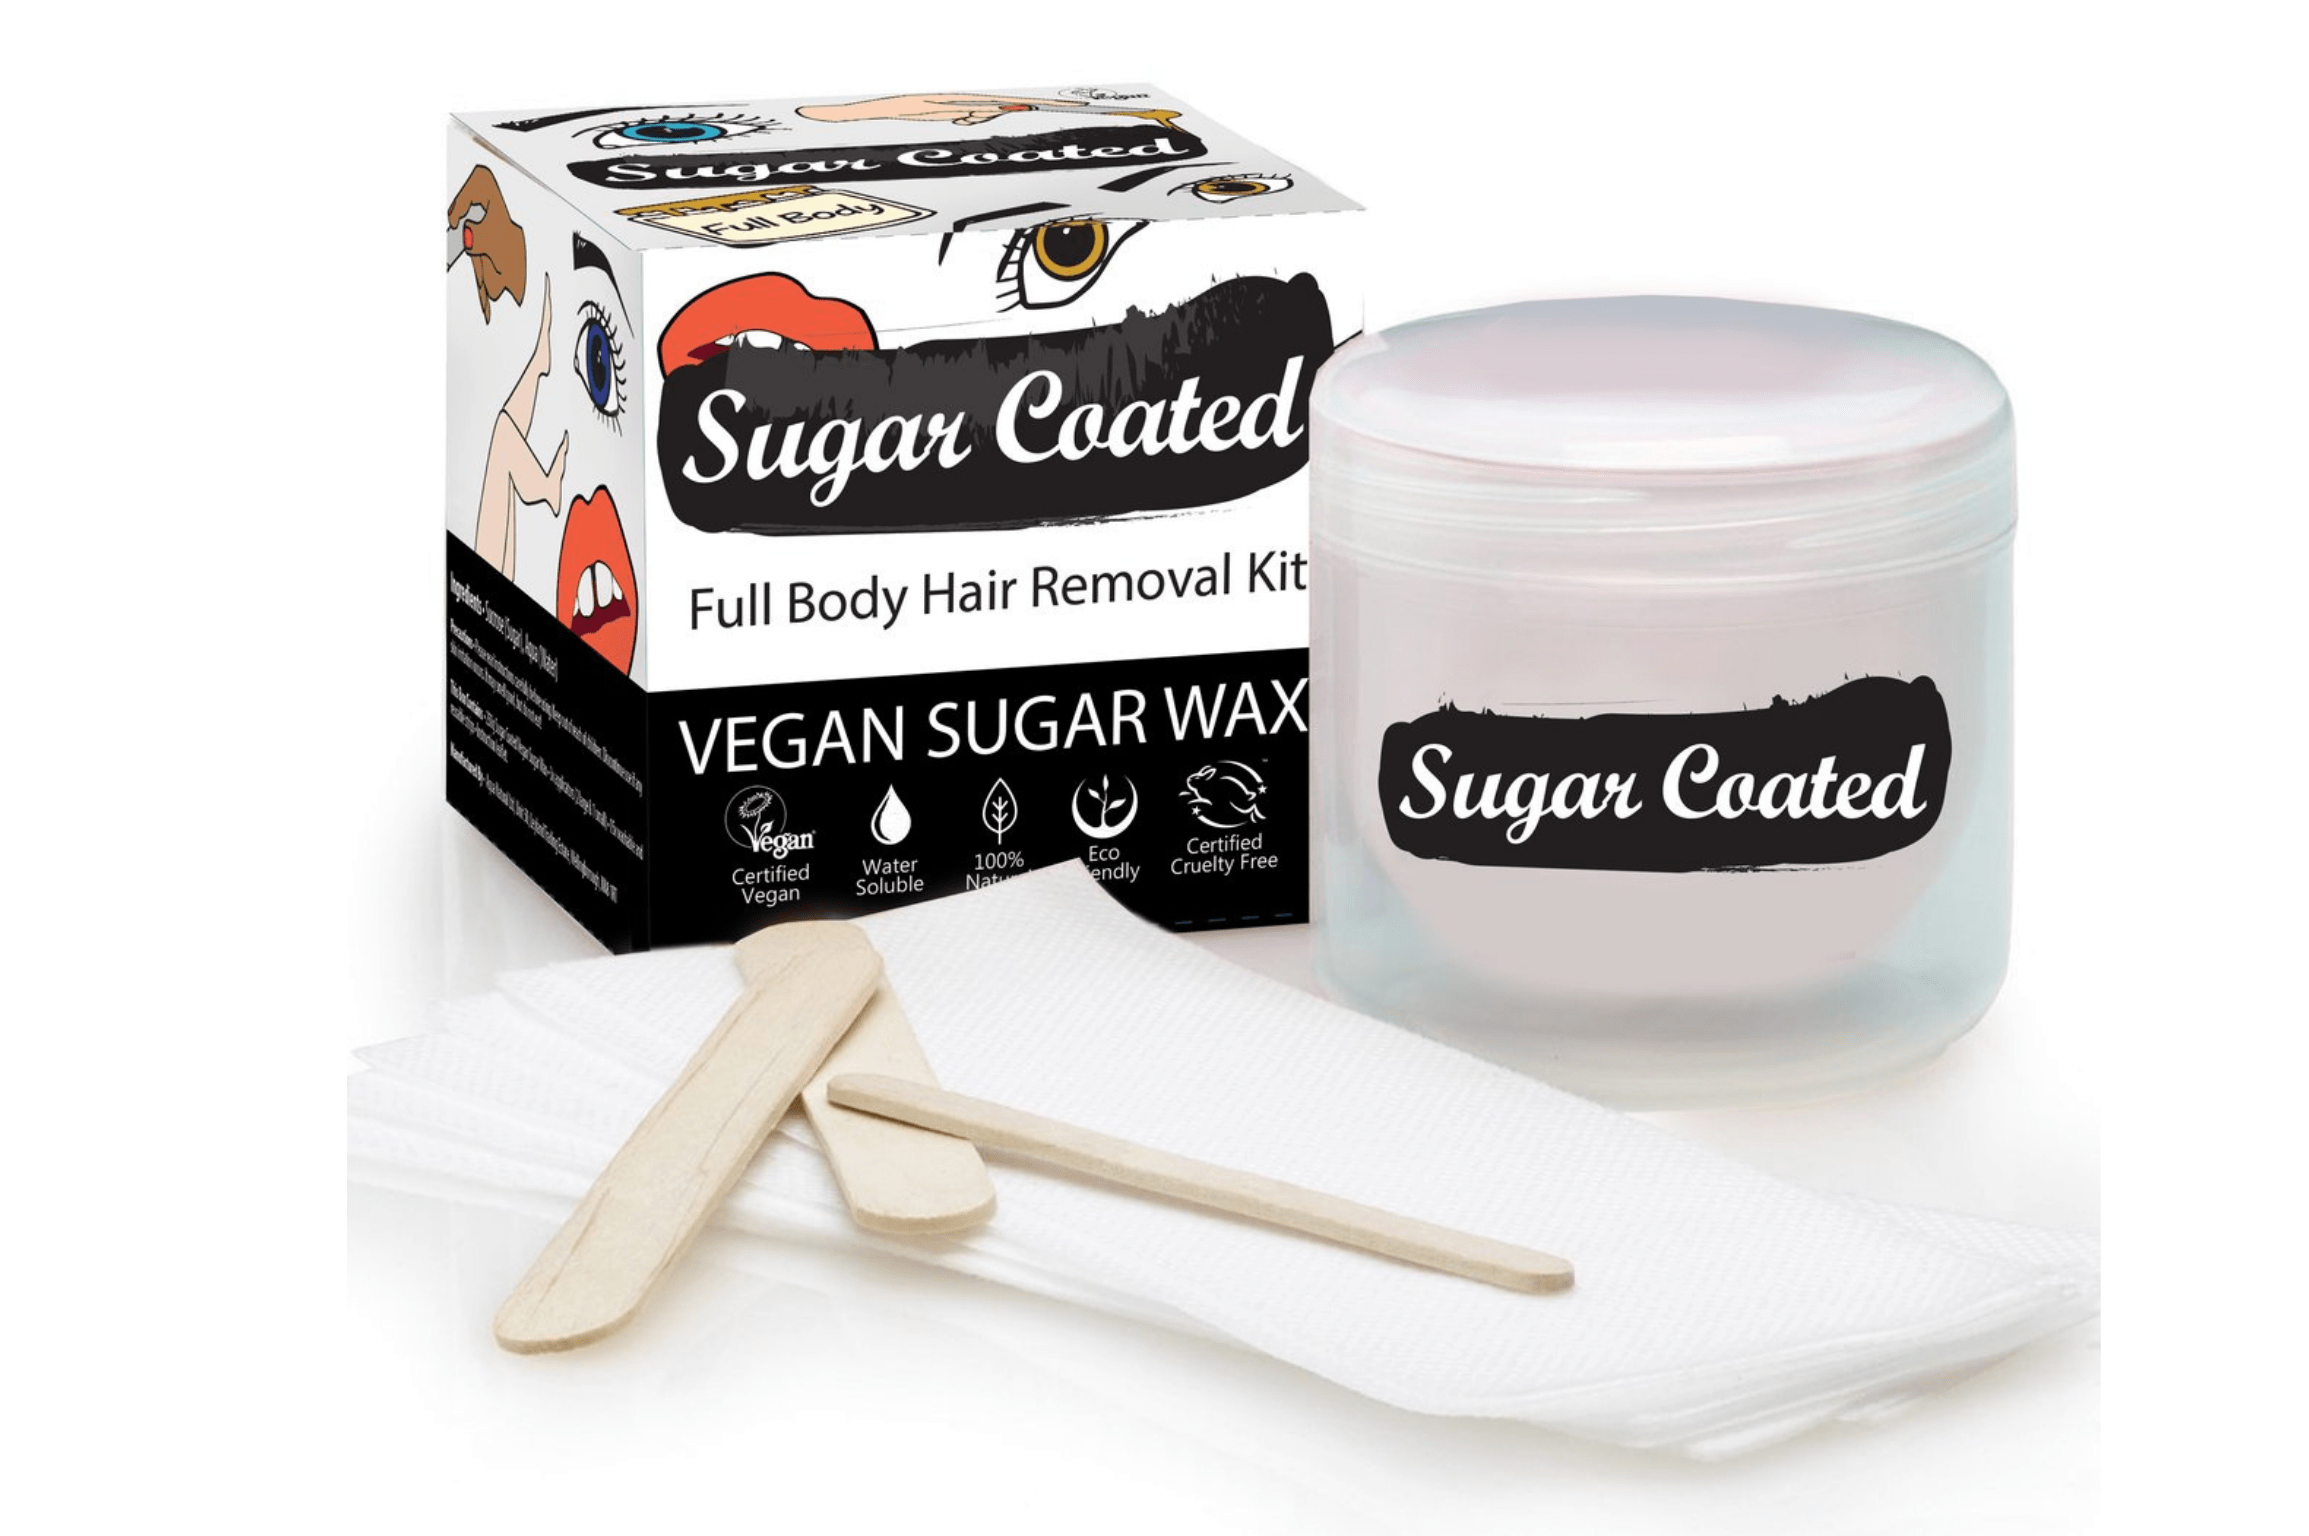 Sugar Coated Full Body Hair Removal Kit Vegan Wax winter skincare essentials